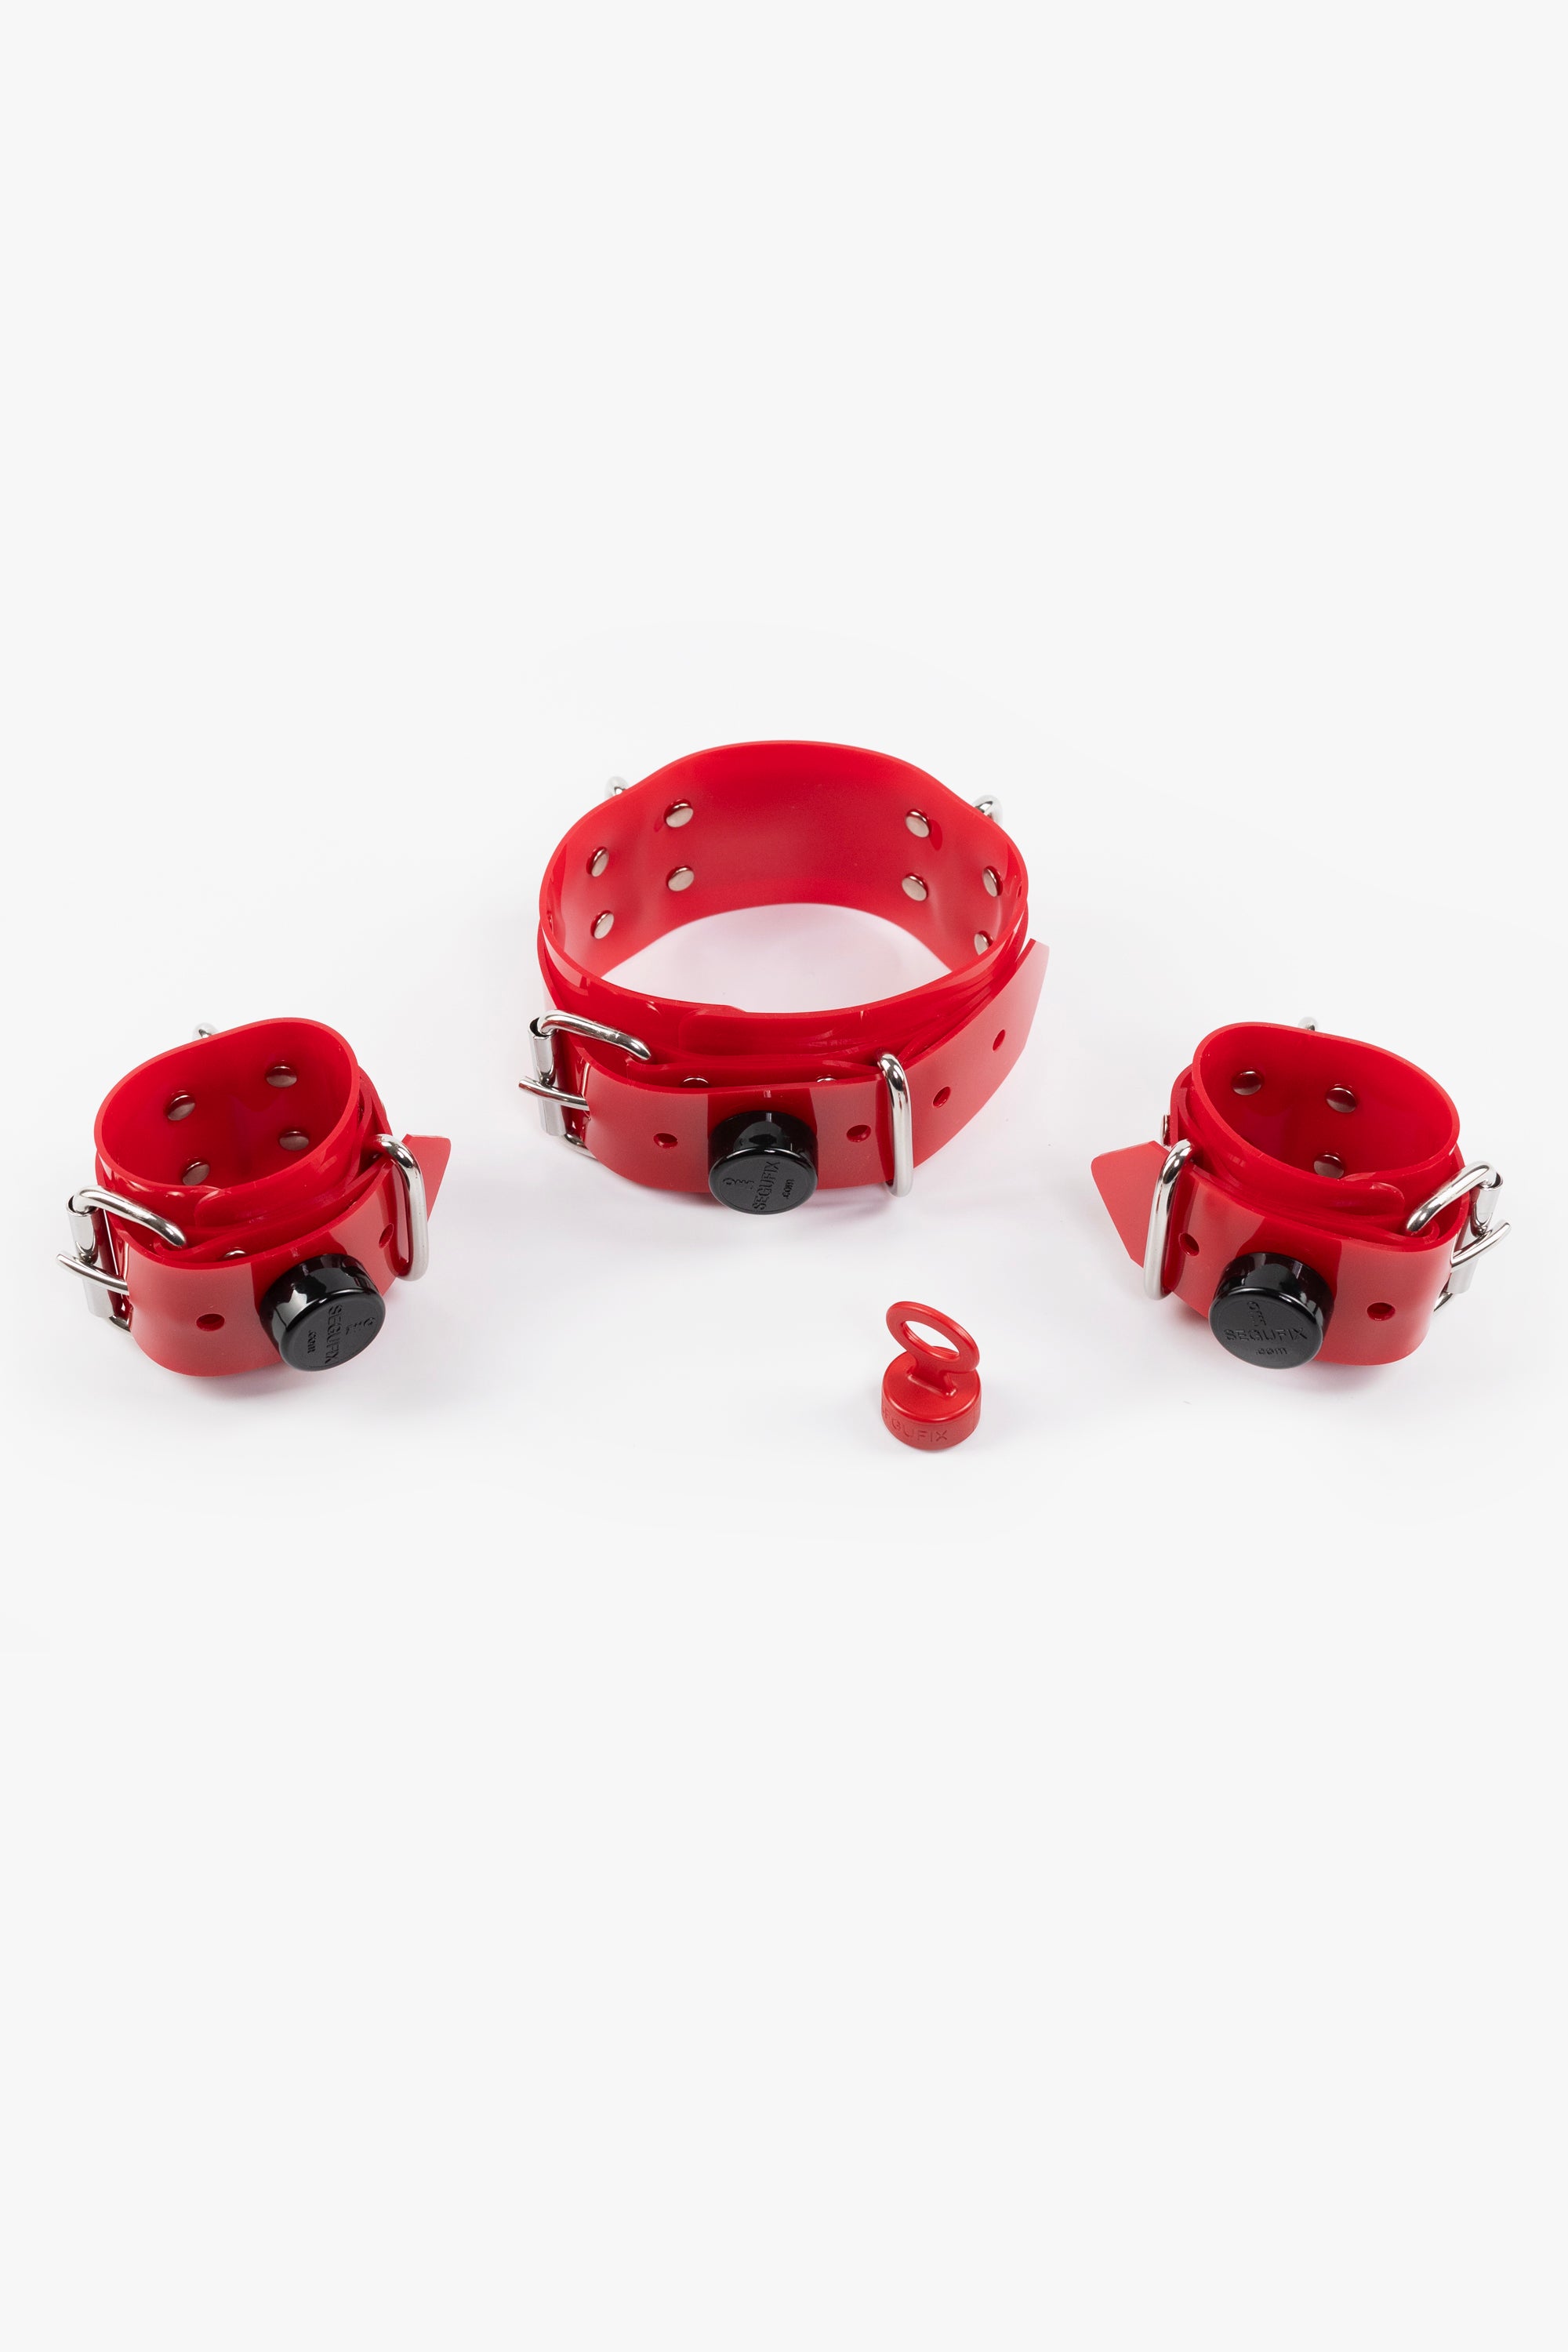 Lockable segufix collar and wrist cuffs set, red/chrome